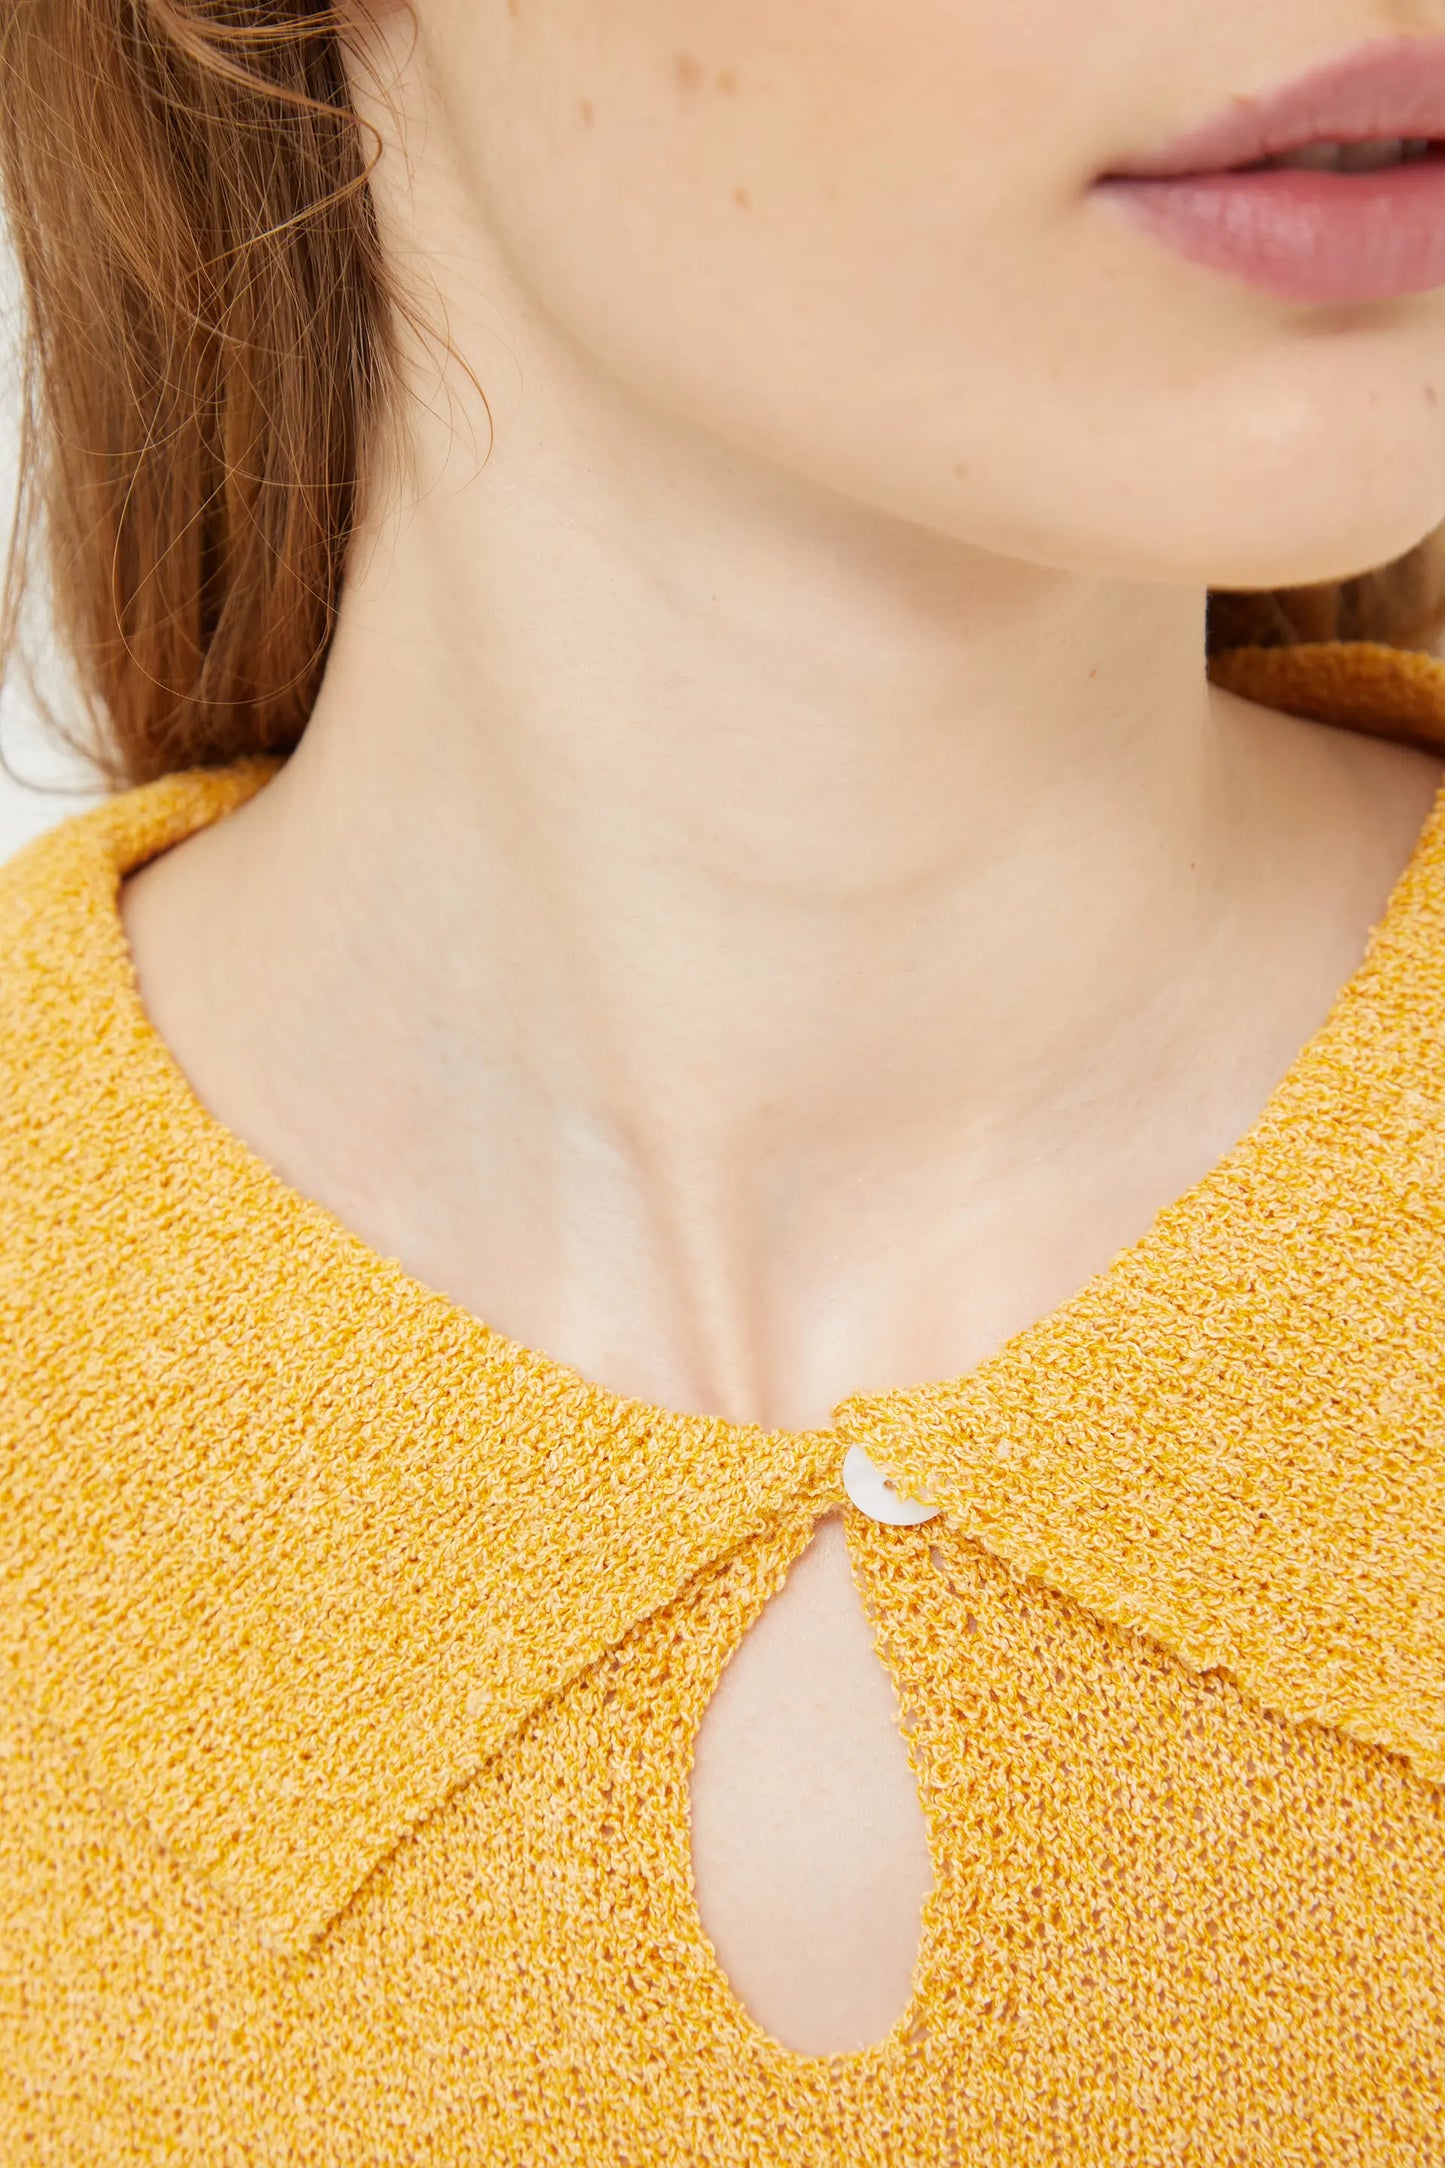 Yellow polo neck sweater